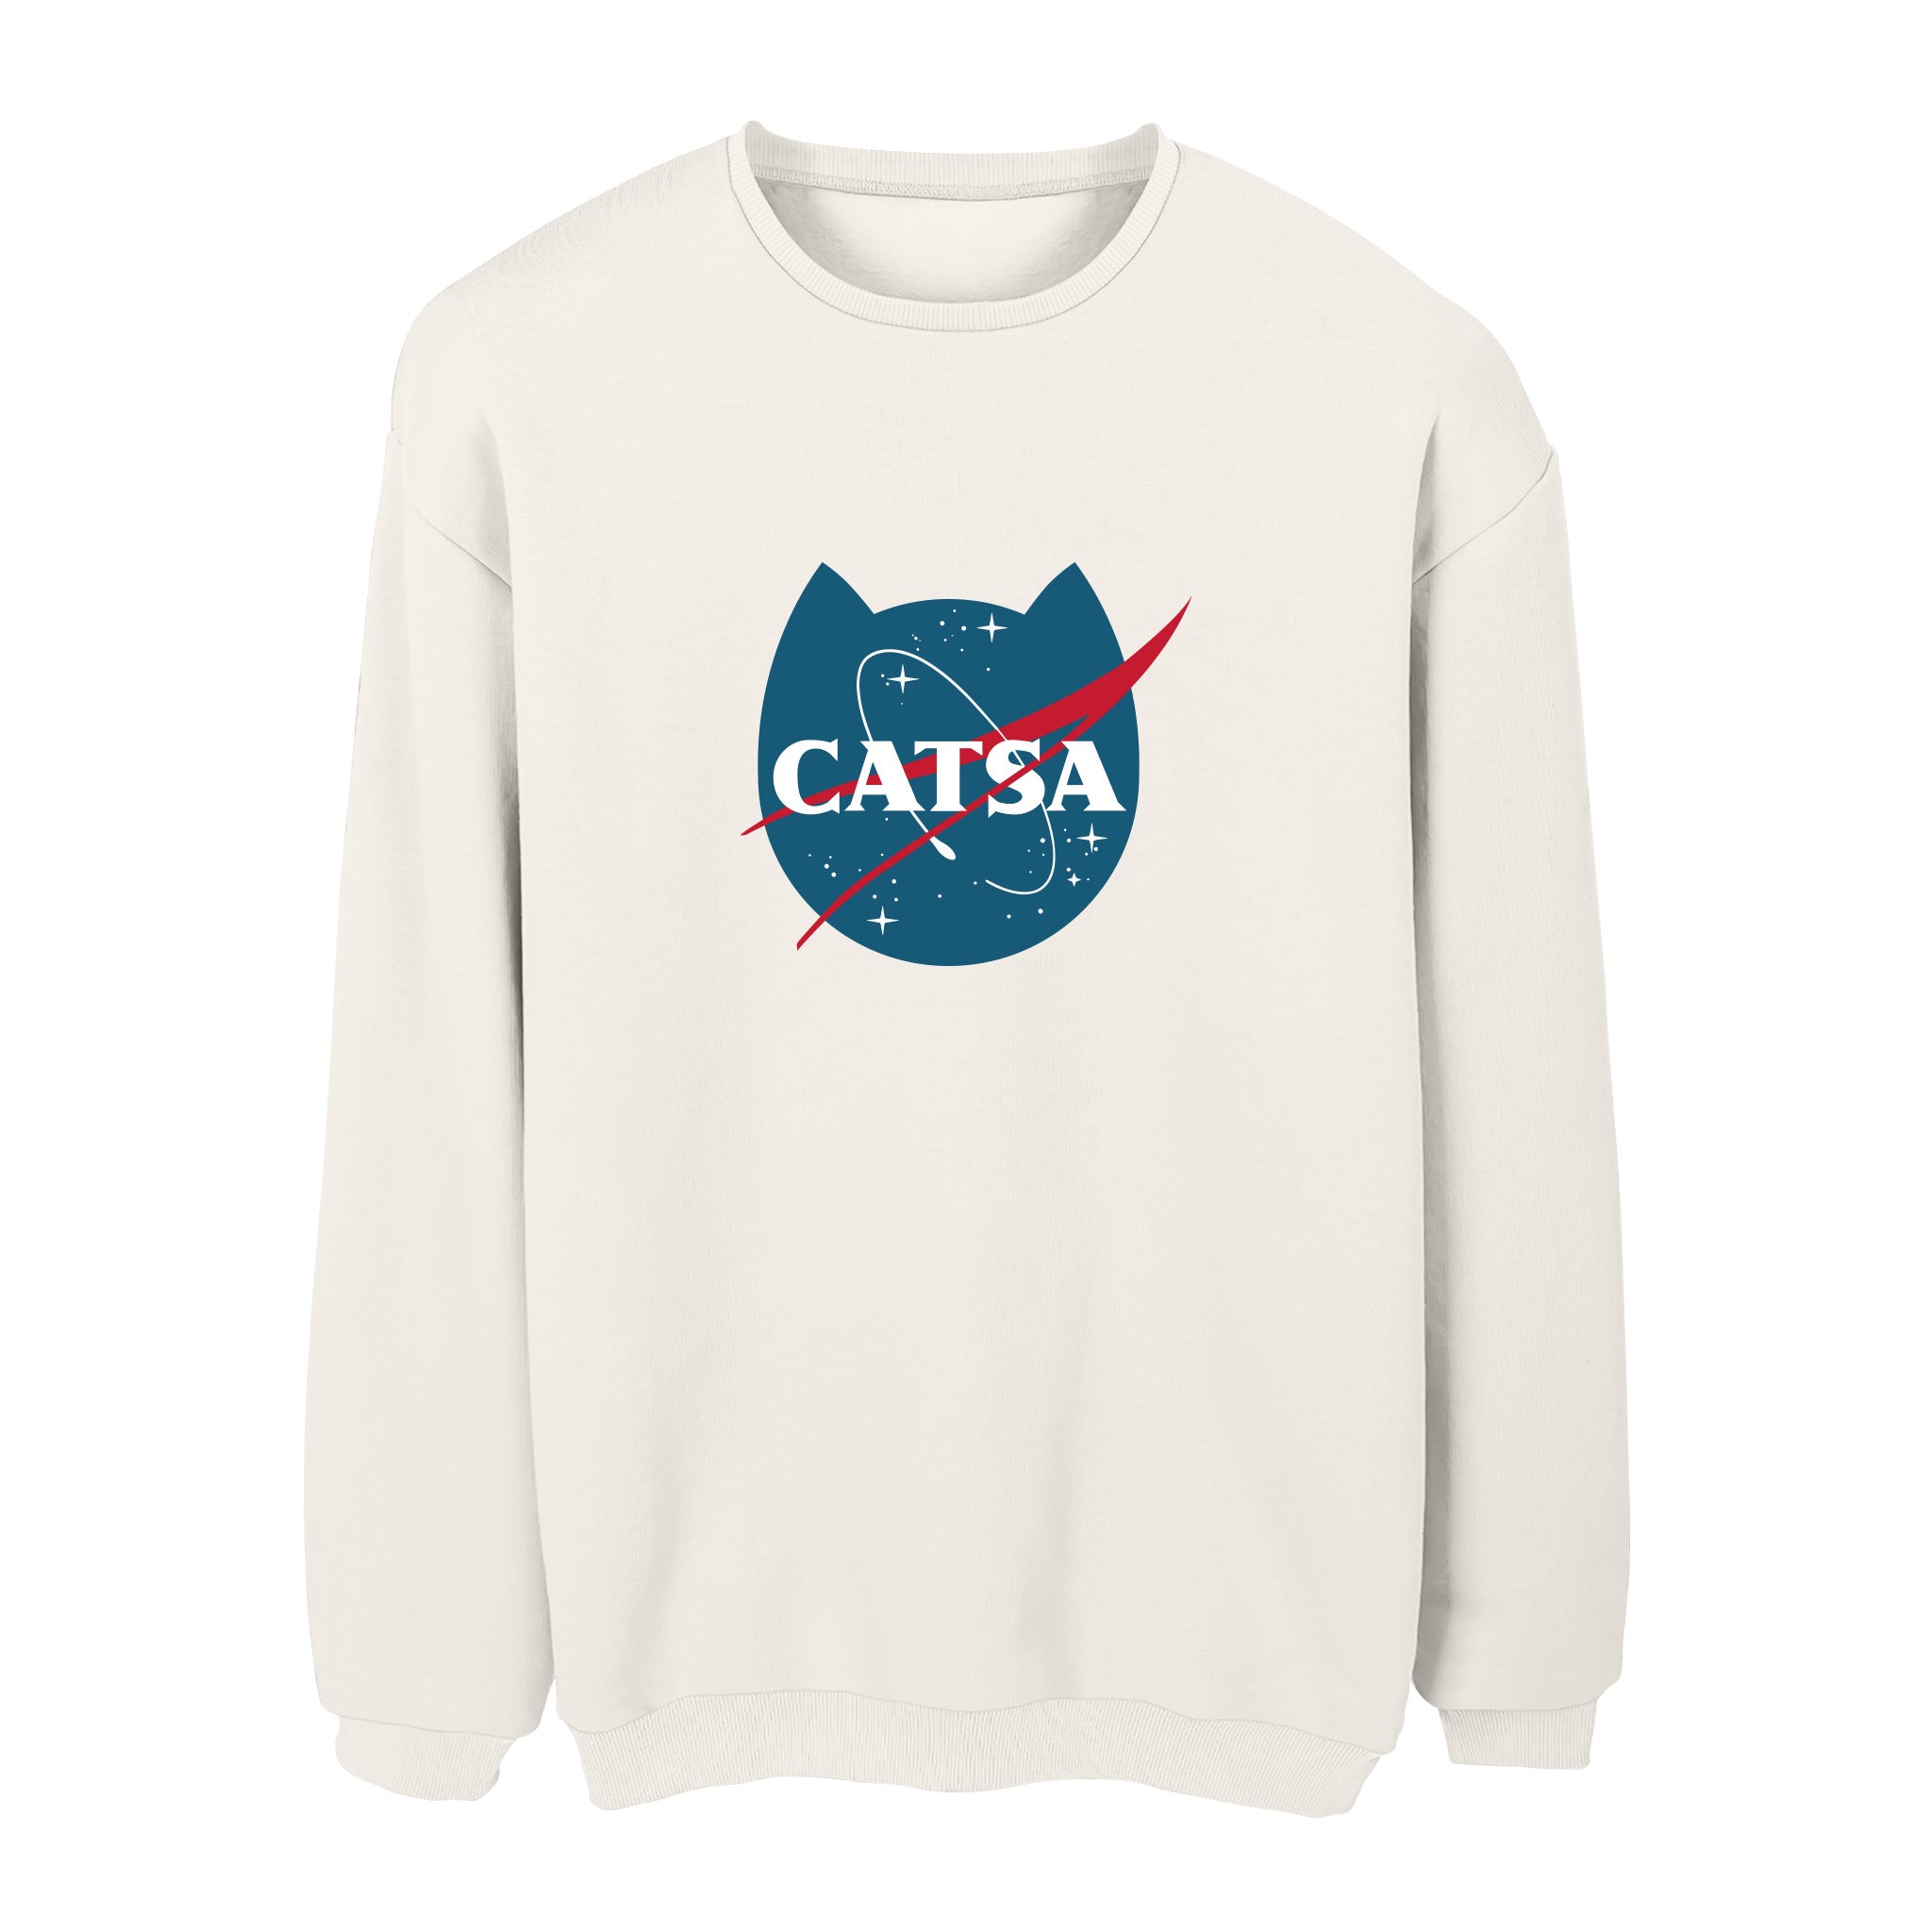 Catsa - Sweatshirt